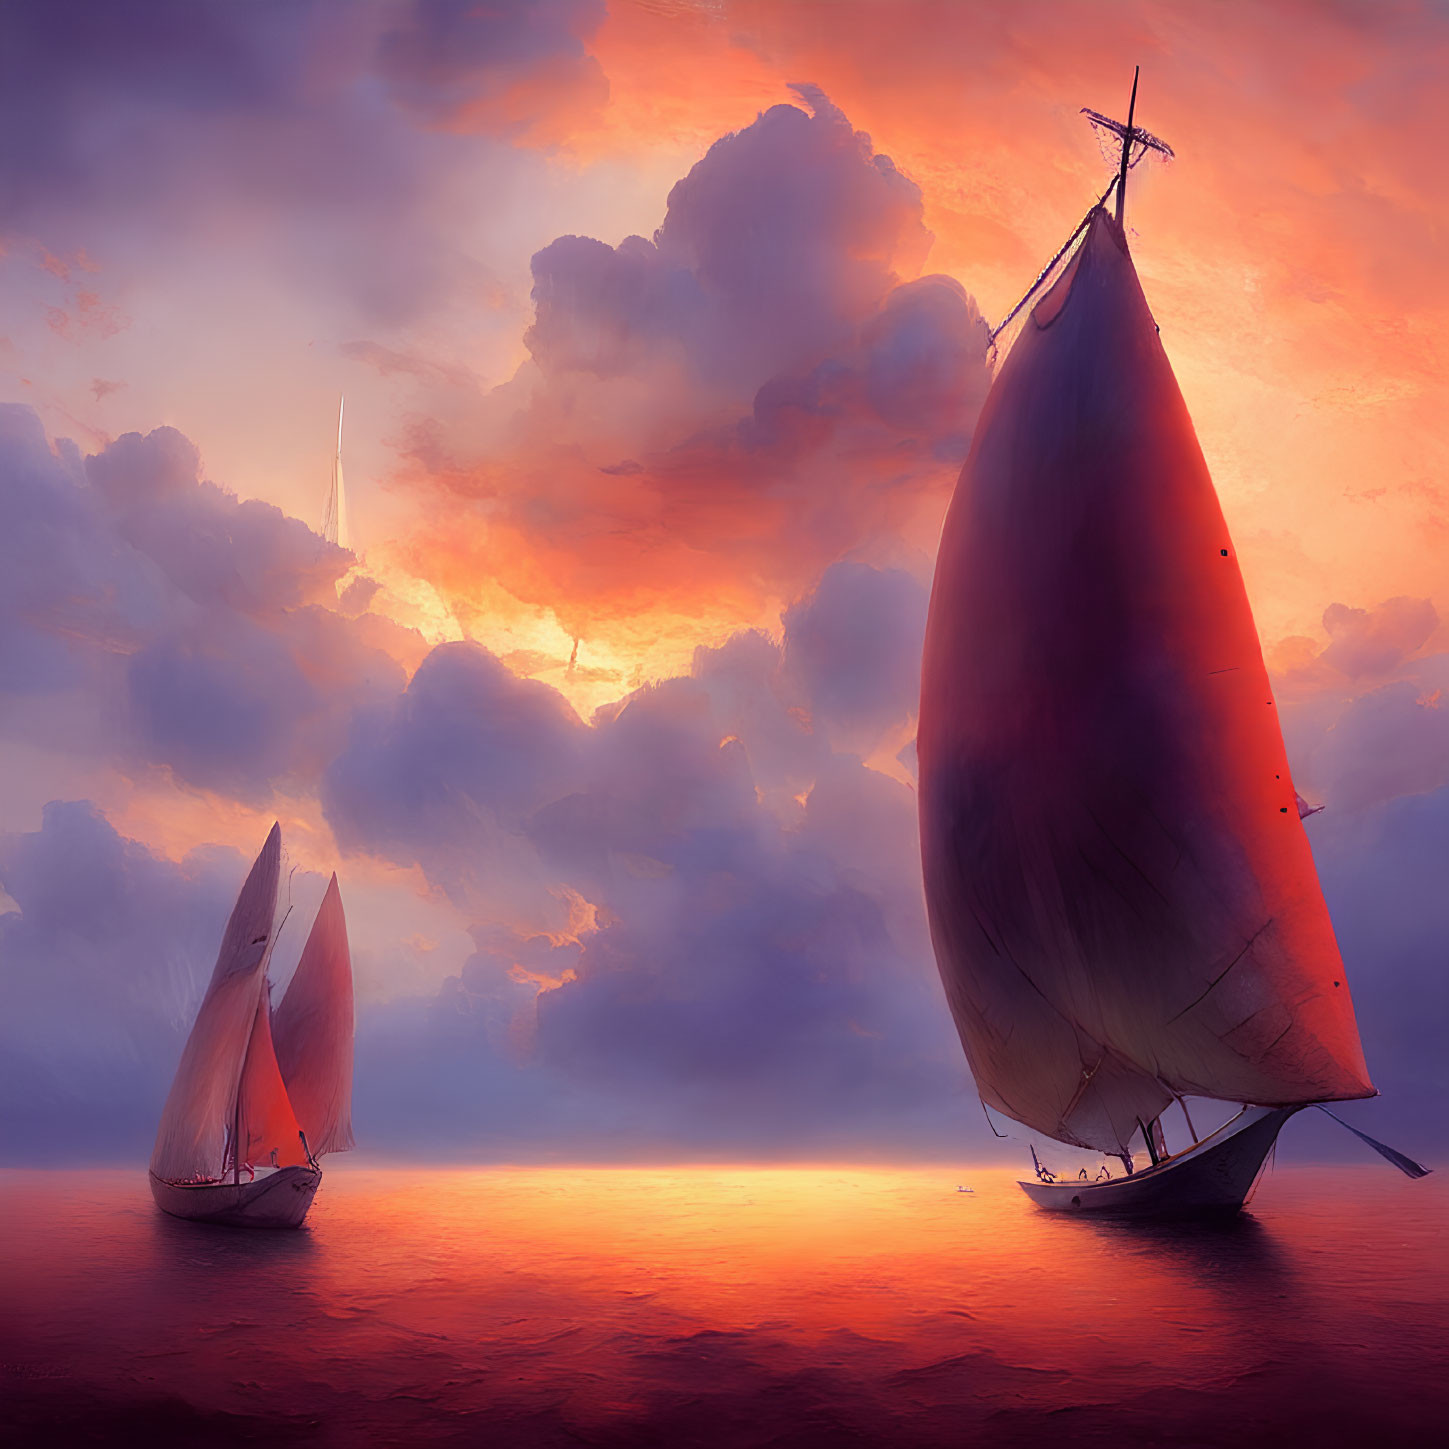 Sailboats on tranquil sea under dramatic orange sunset sky